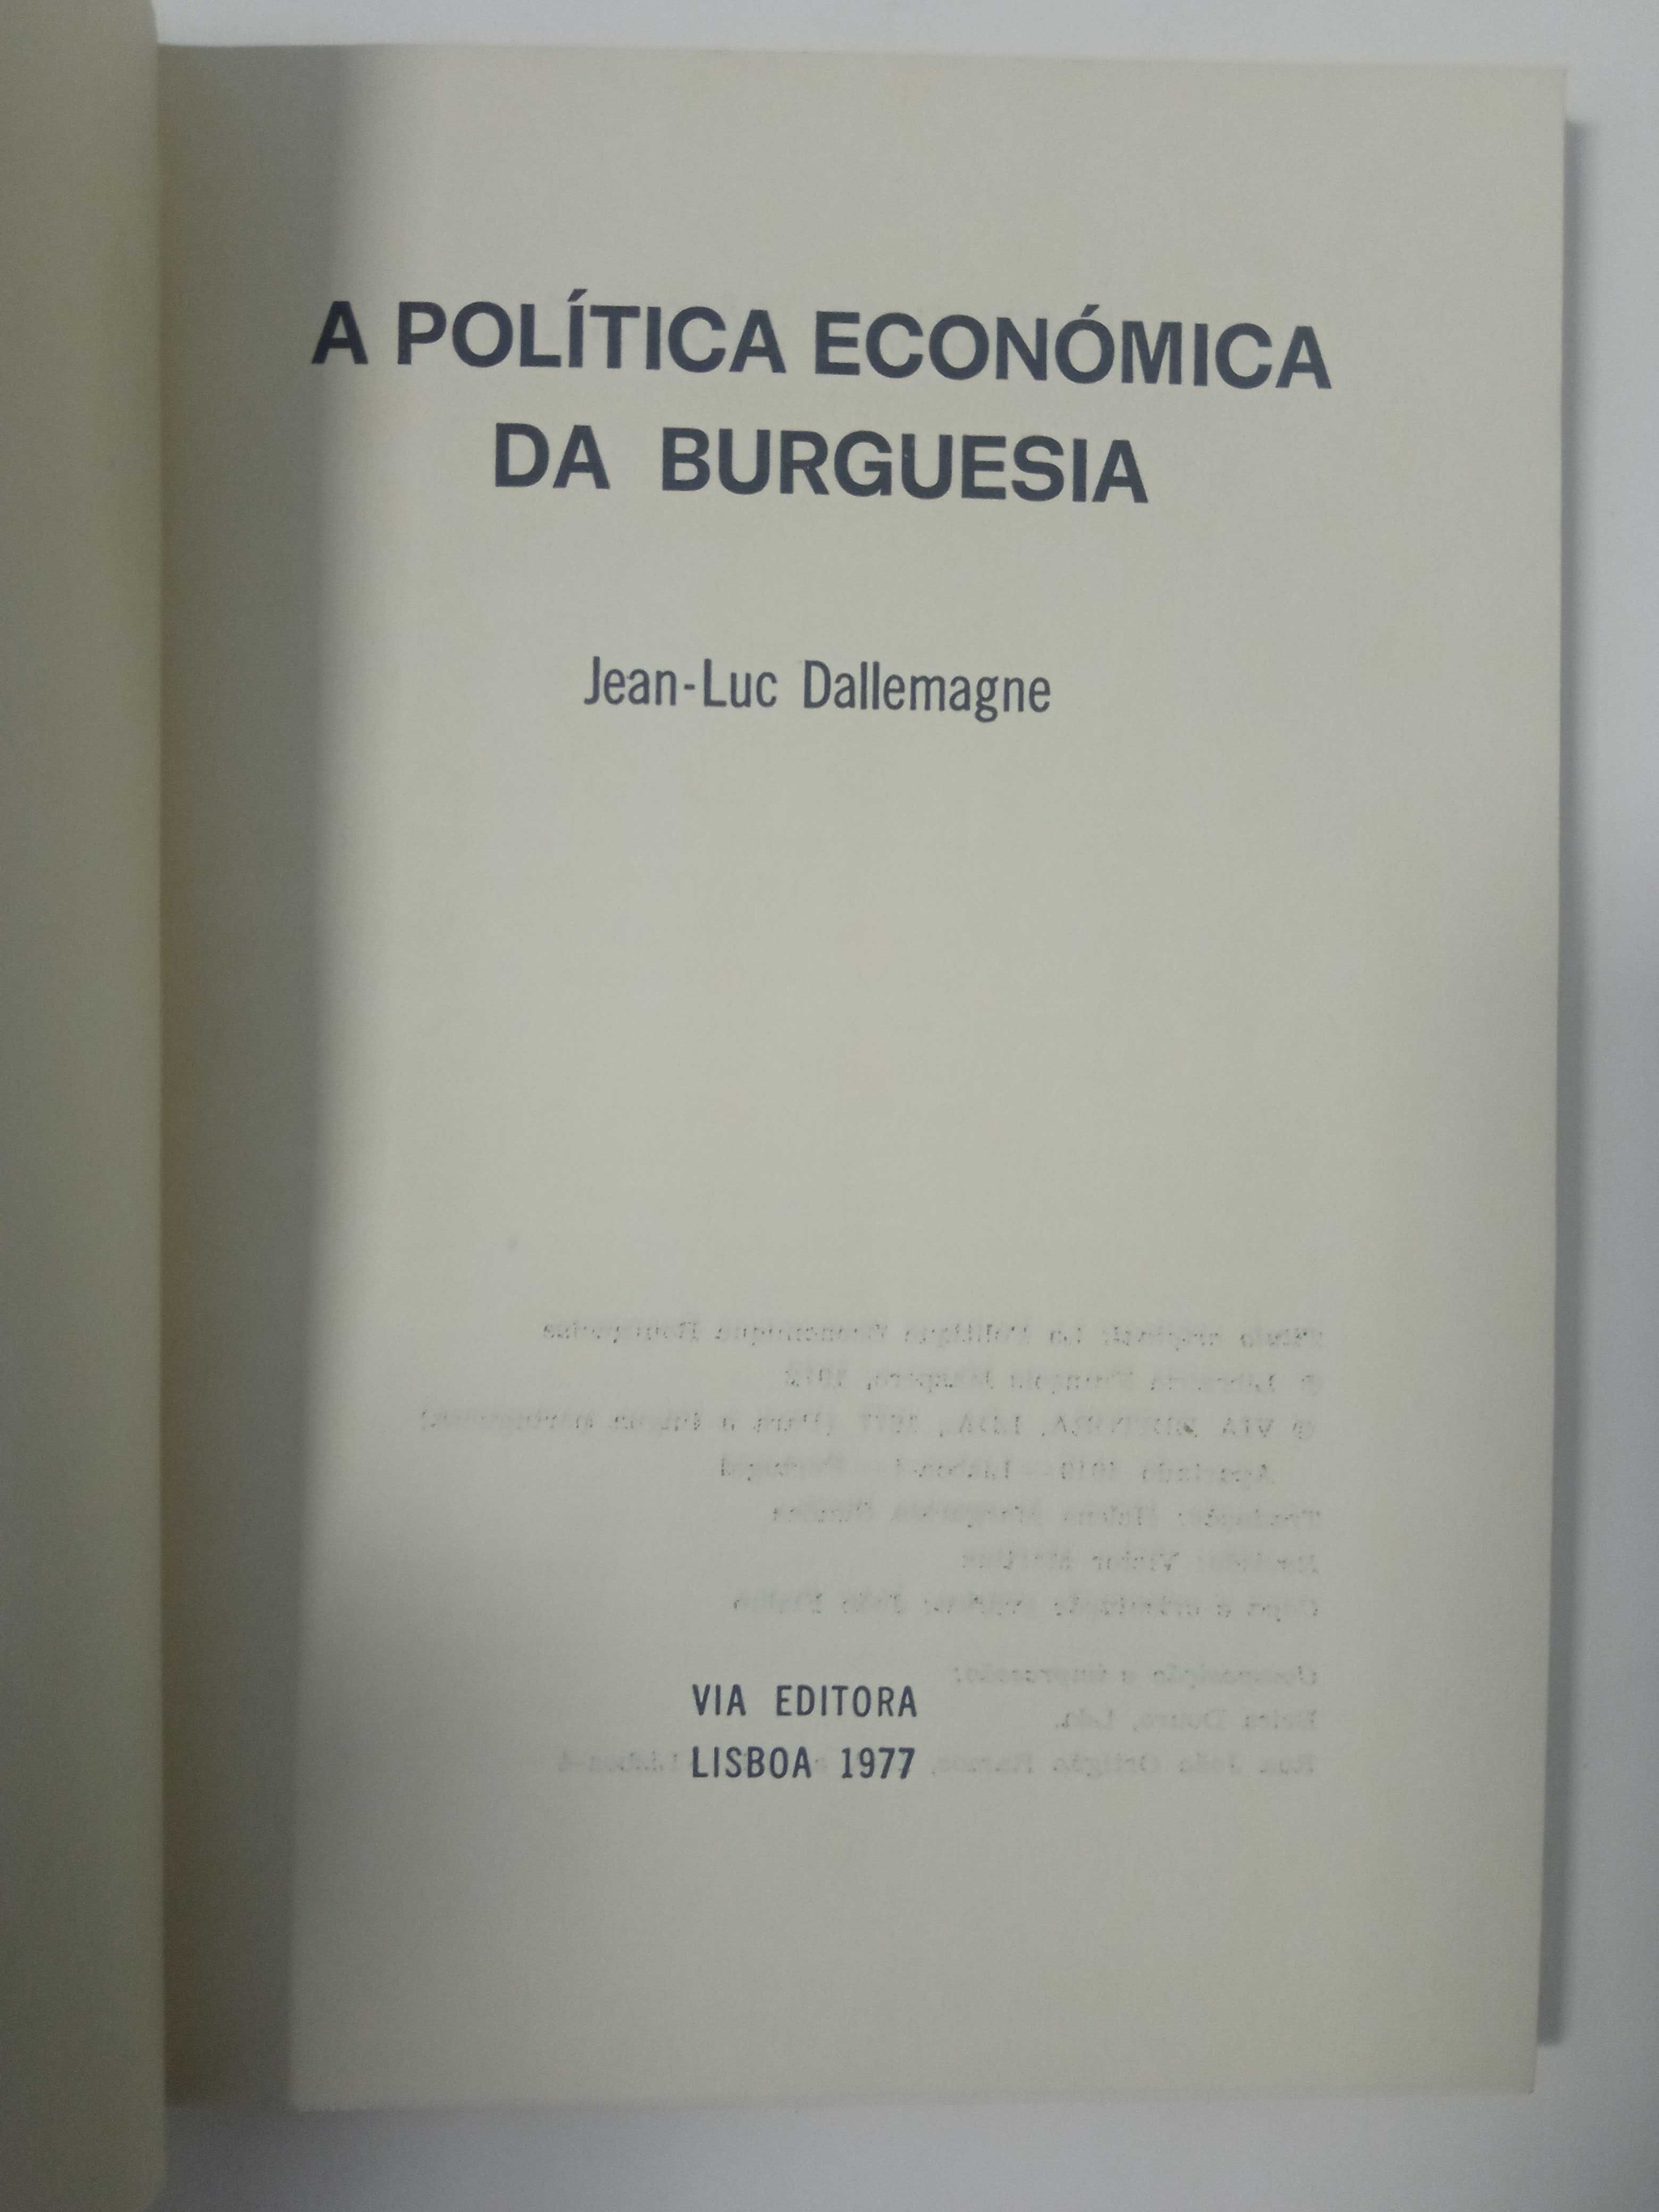 A política económica da Burguesia, de J. L. Dallemagne